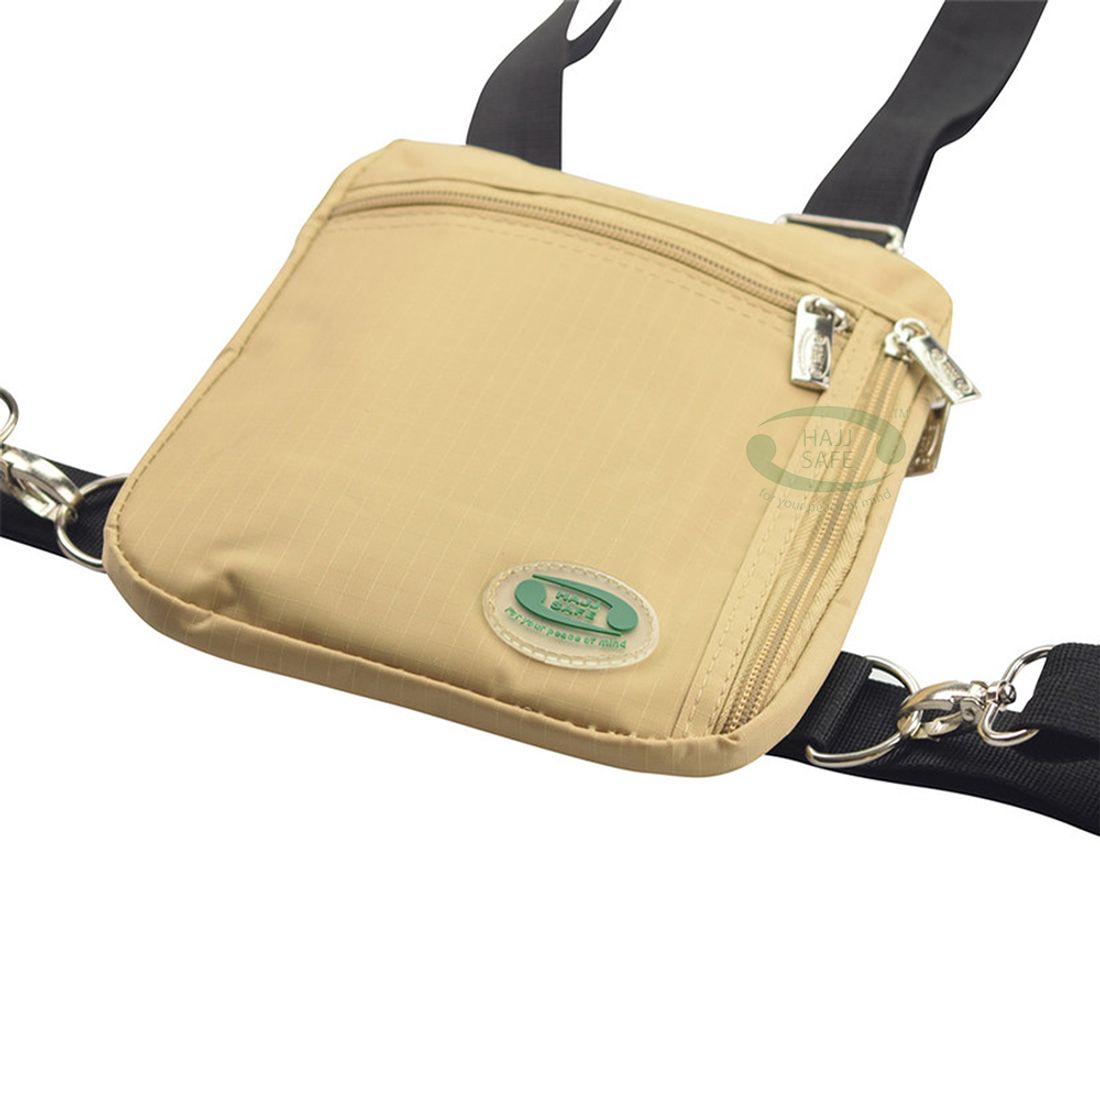 Hajj Safe™ Hajj & Umrah – Anti-Theft Secure Side Bag & Neck Bag